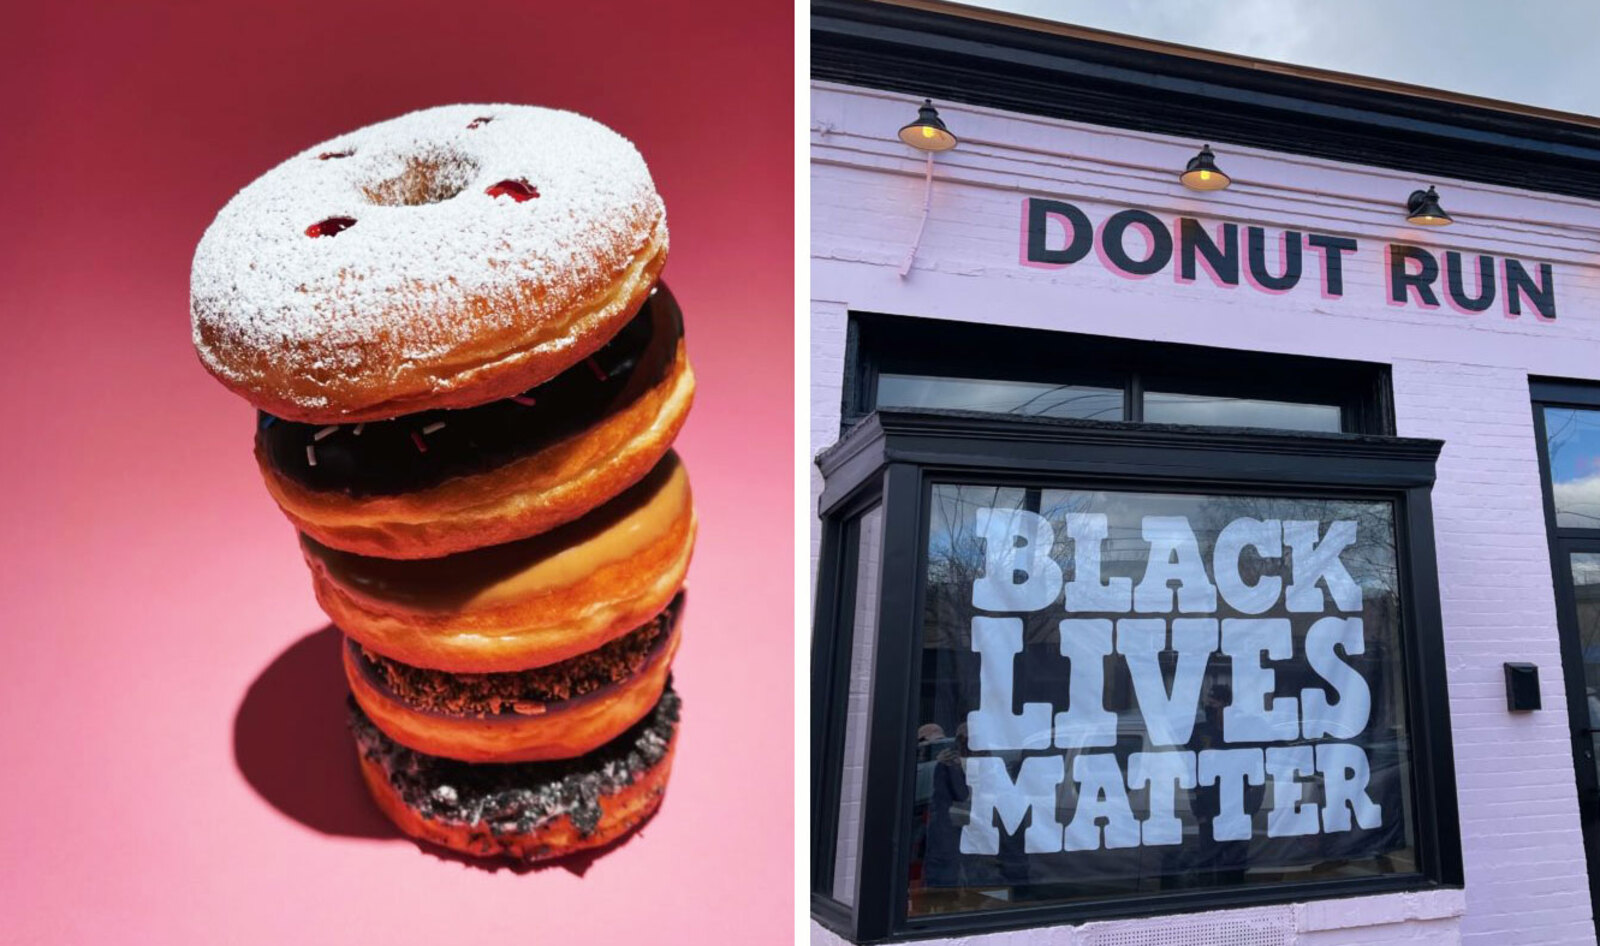 Washington, DC Gets Its First Vegan Doughnut Shop